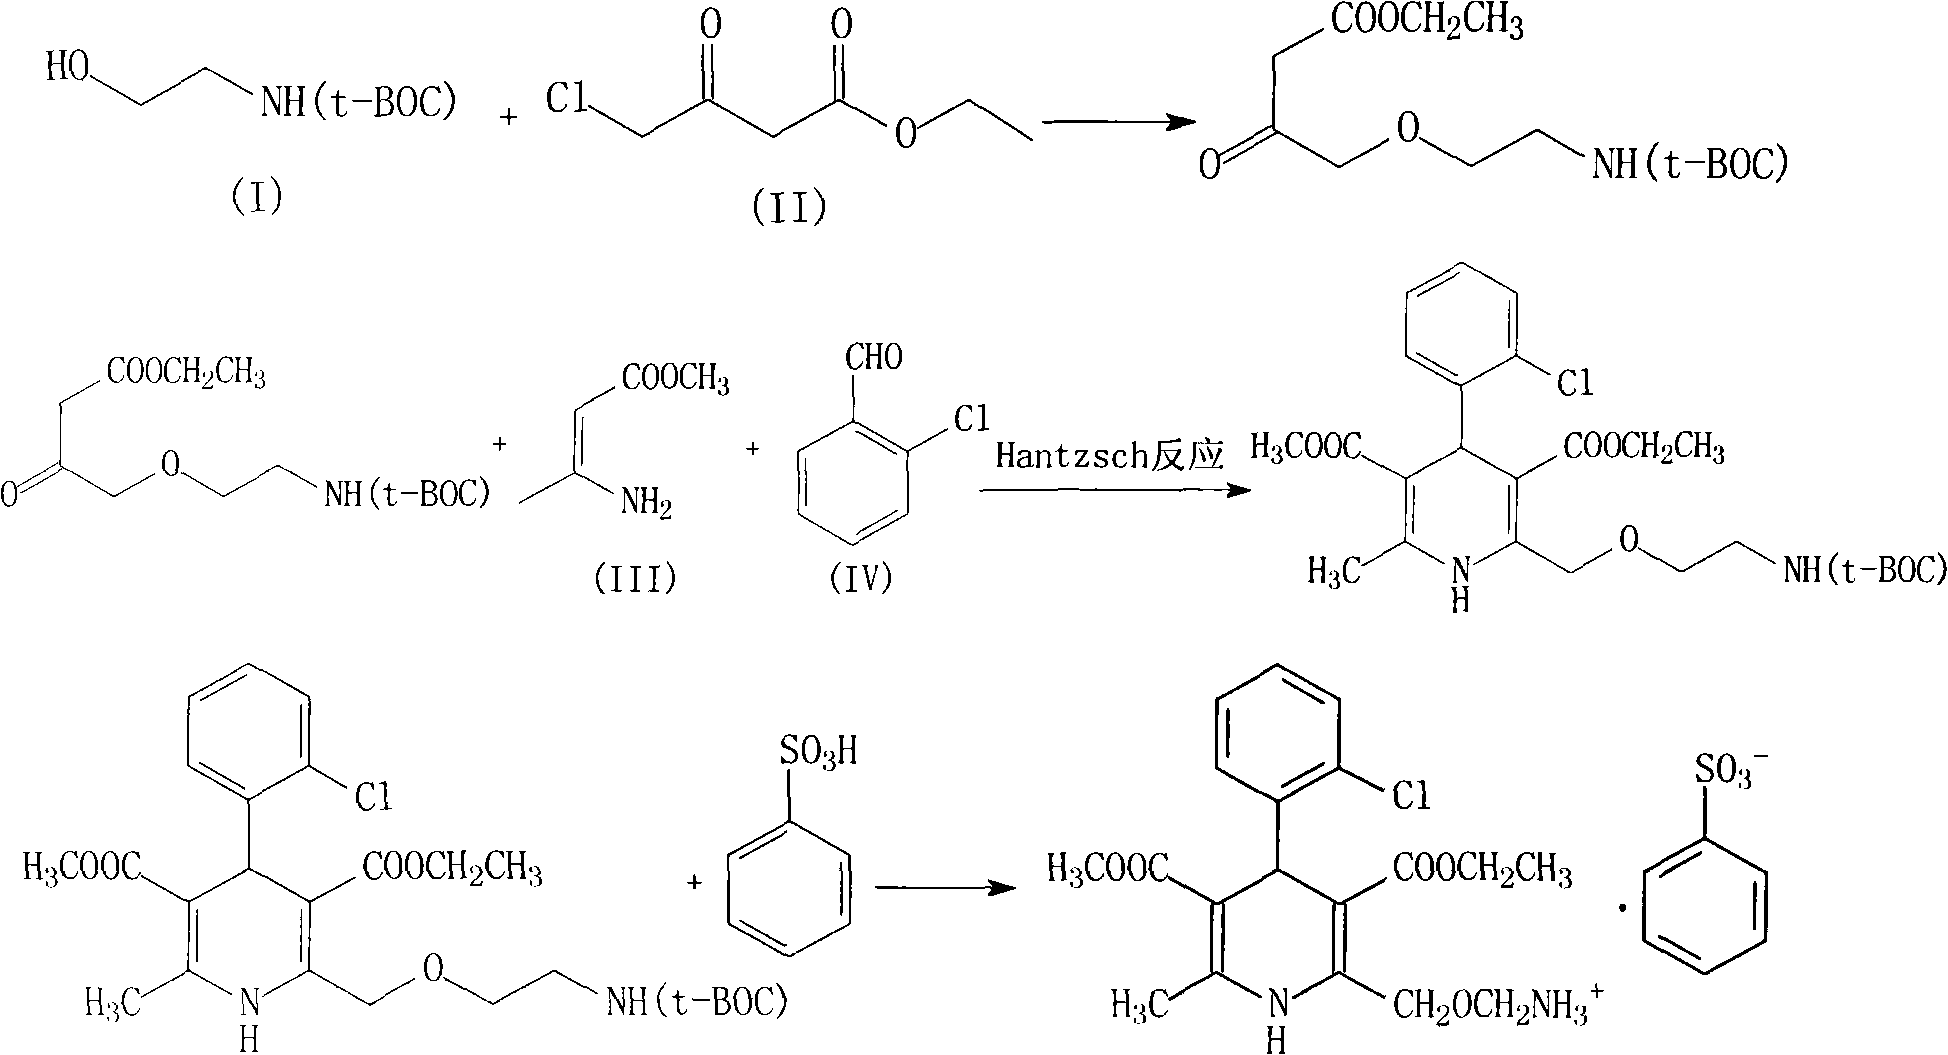 Amlodipine besylate compound and novel preparation method thereof